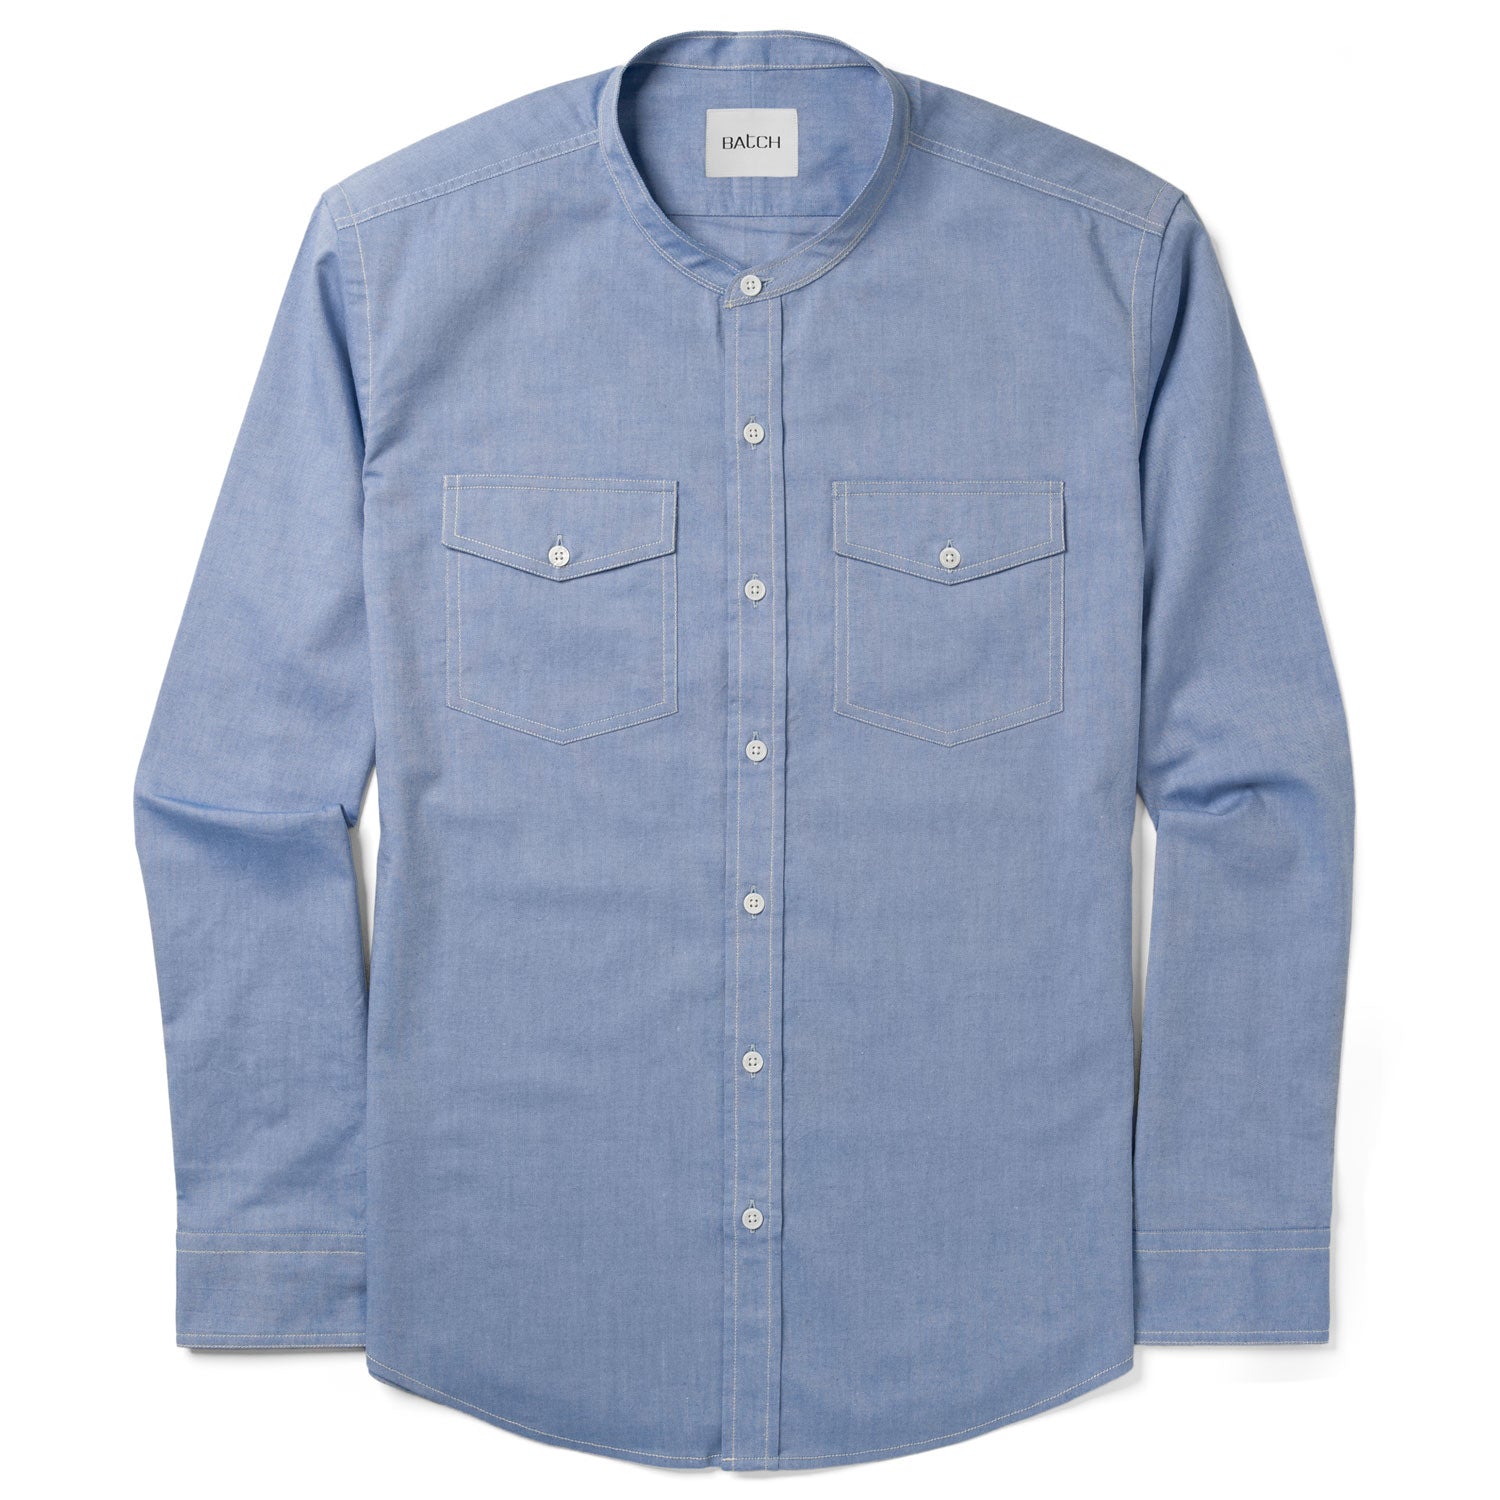 Kimpton Men's Pioneer Band Collar Utility Shirt – Classic Blue Oxford Cotton